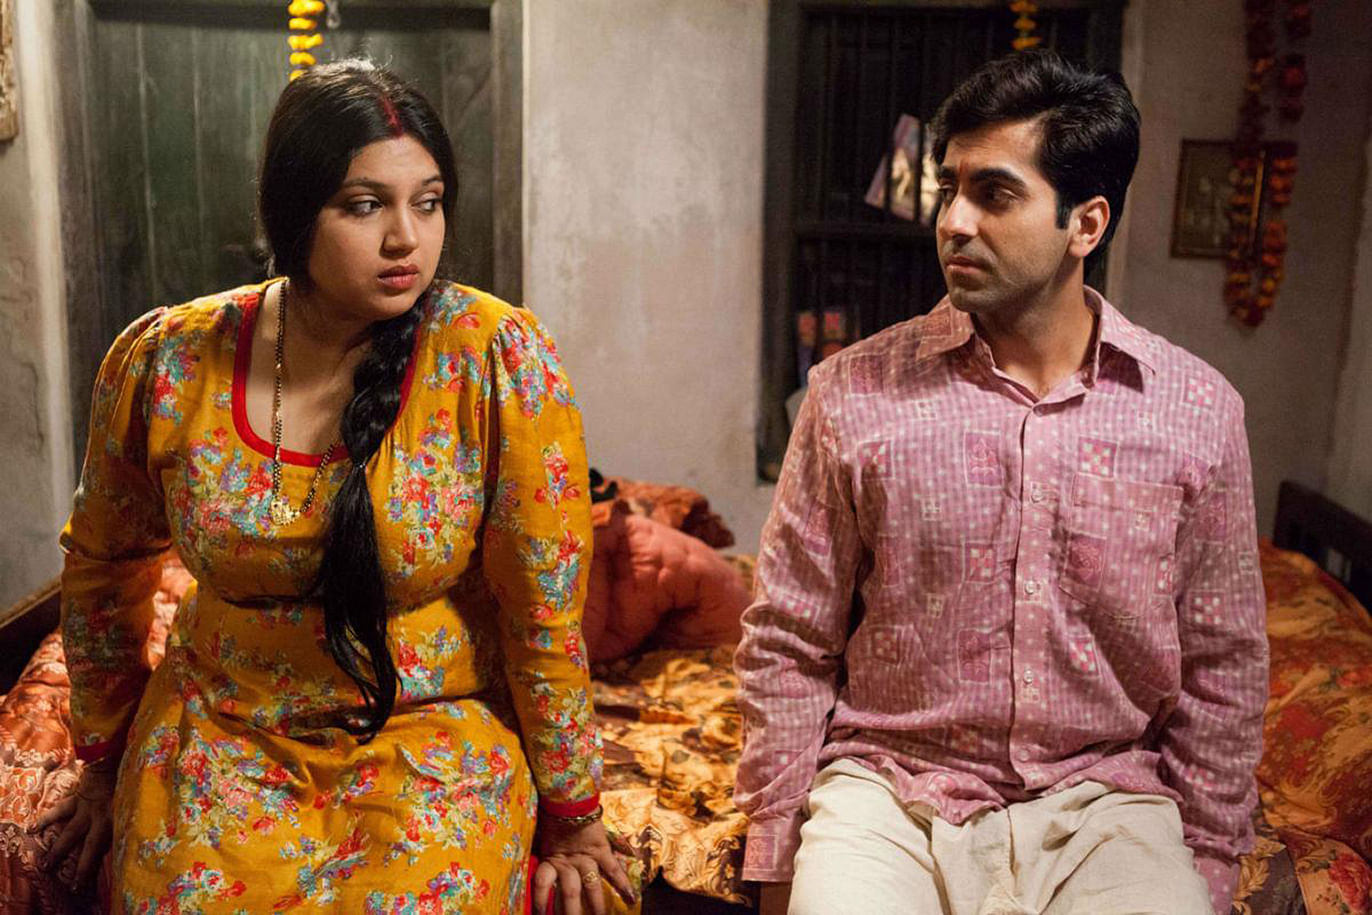 In the Bollywood film ‘Dum Laga Ke Haisha,’ the hero shames his wife as she doesn’t fit into his idea of a dream girl.